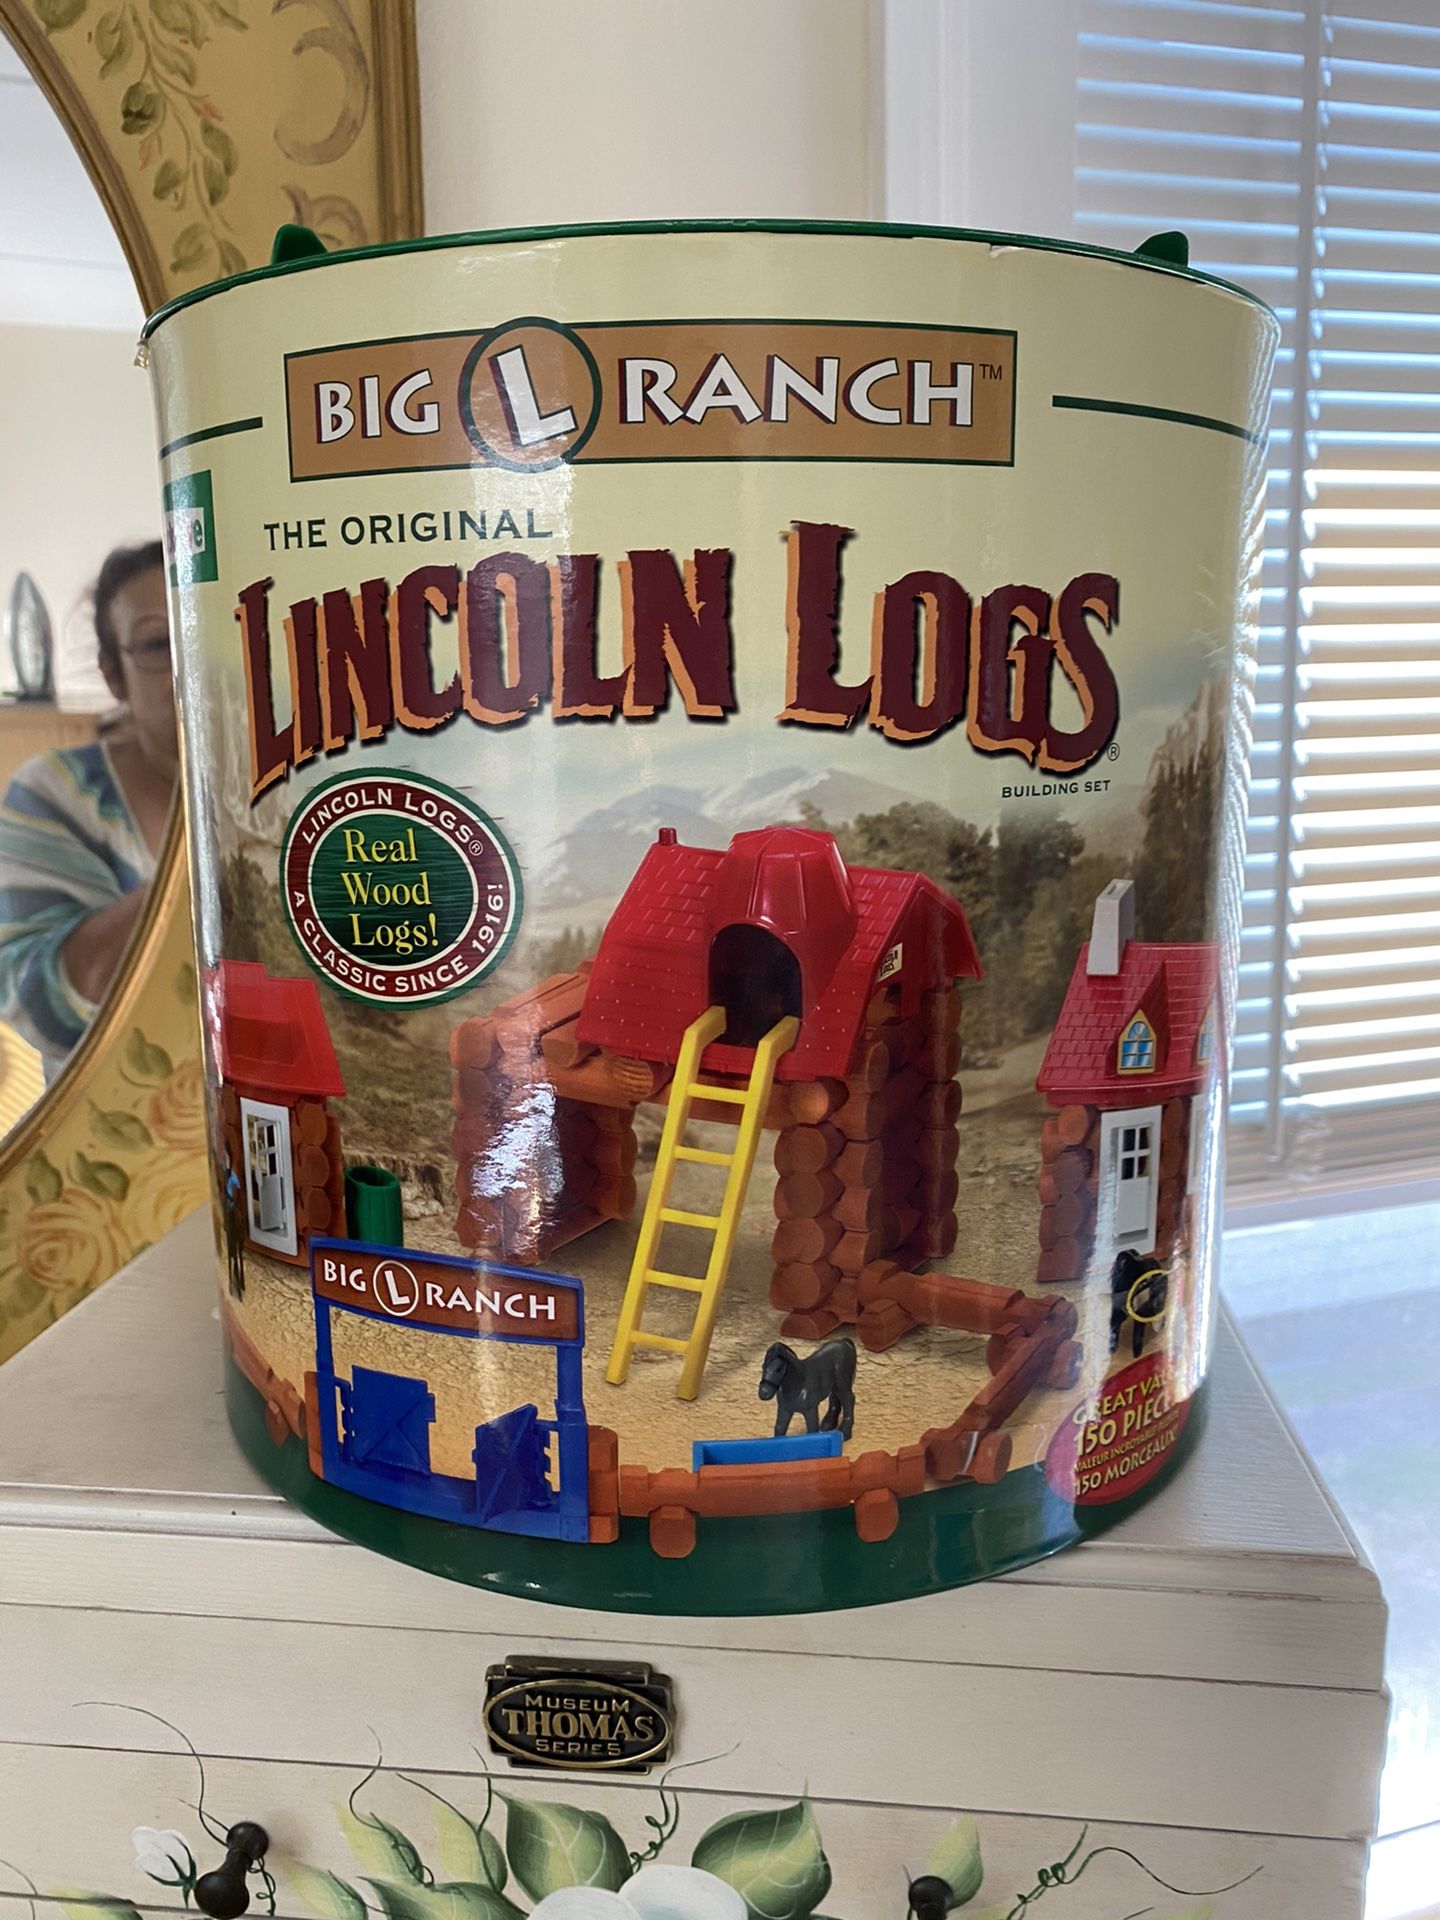 Lincoln logs Big L Ranch 150 piece set